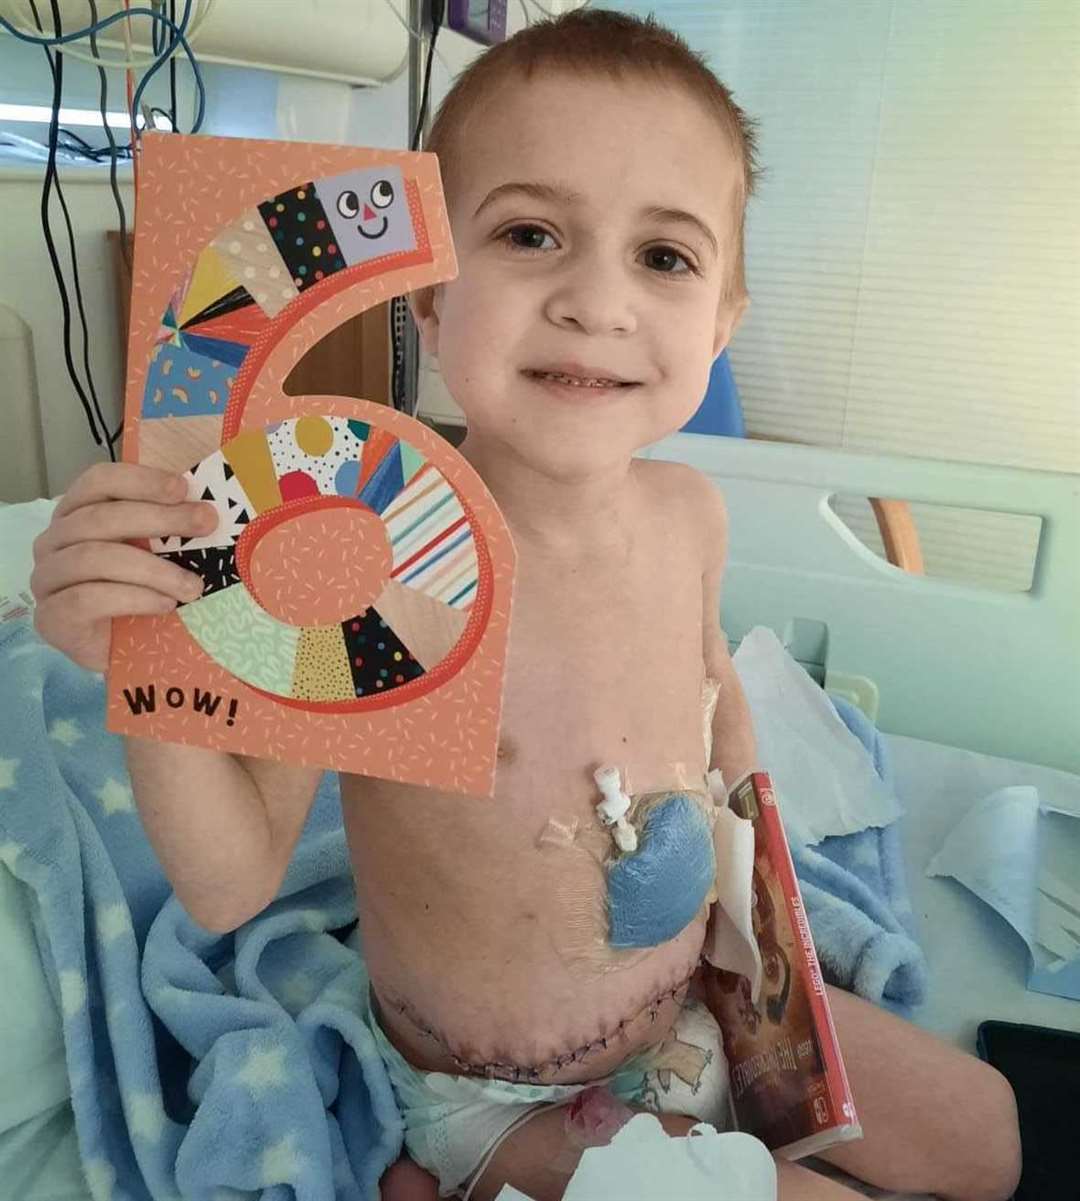 Zak celebrated his sixth birthday in hospital in January